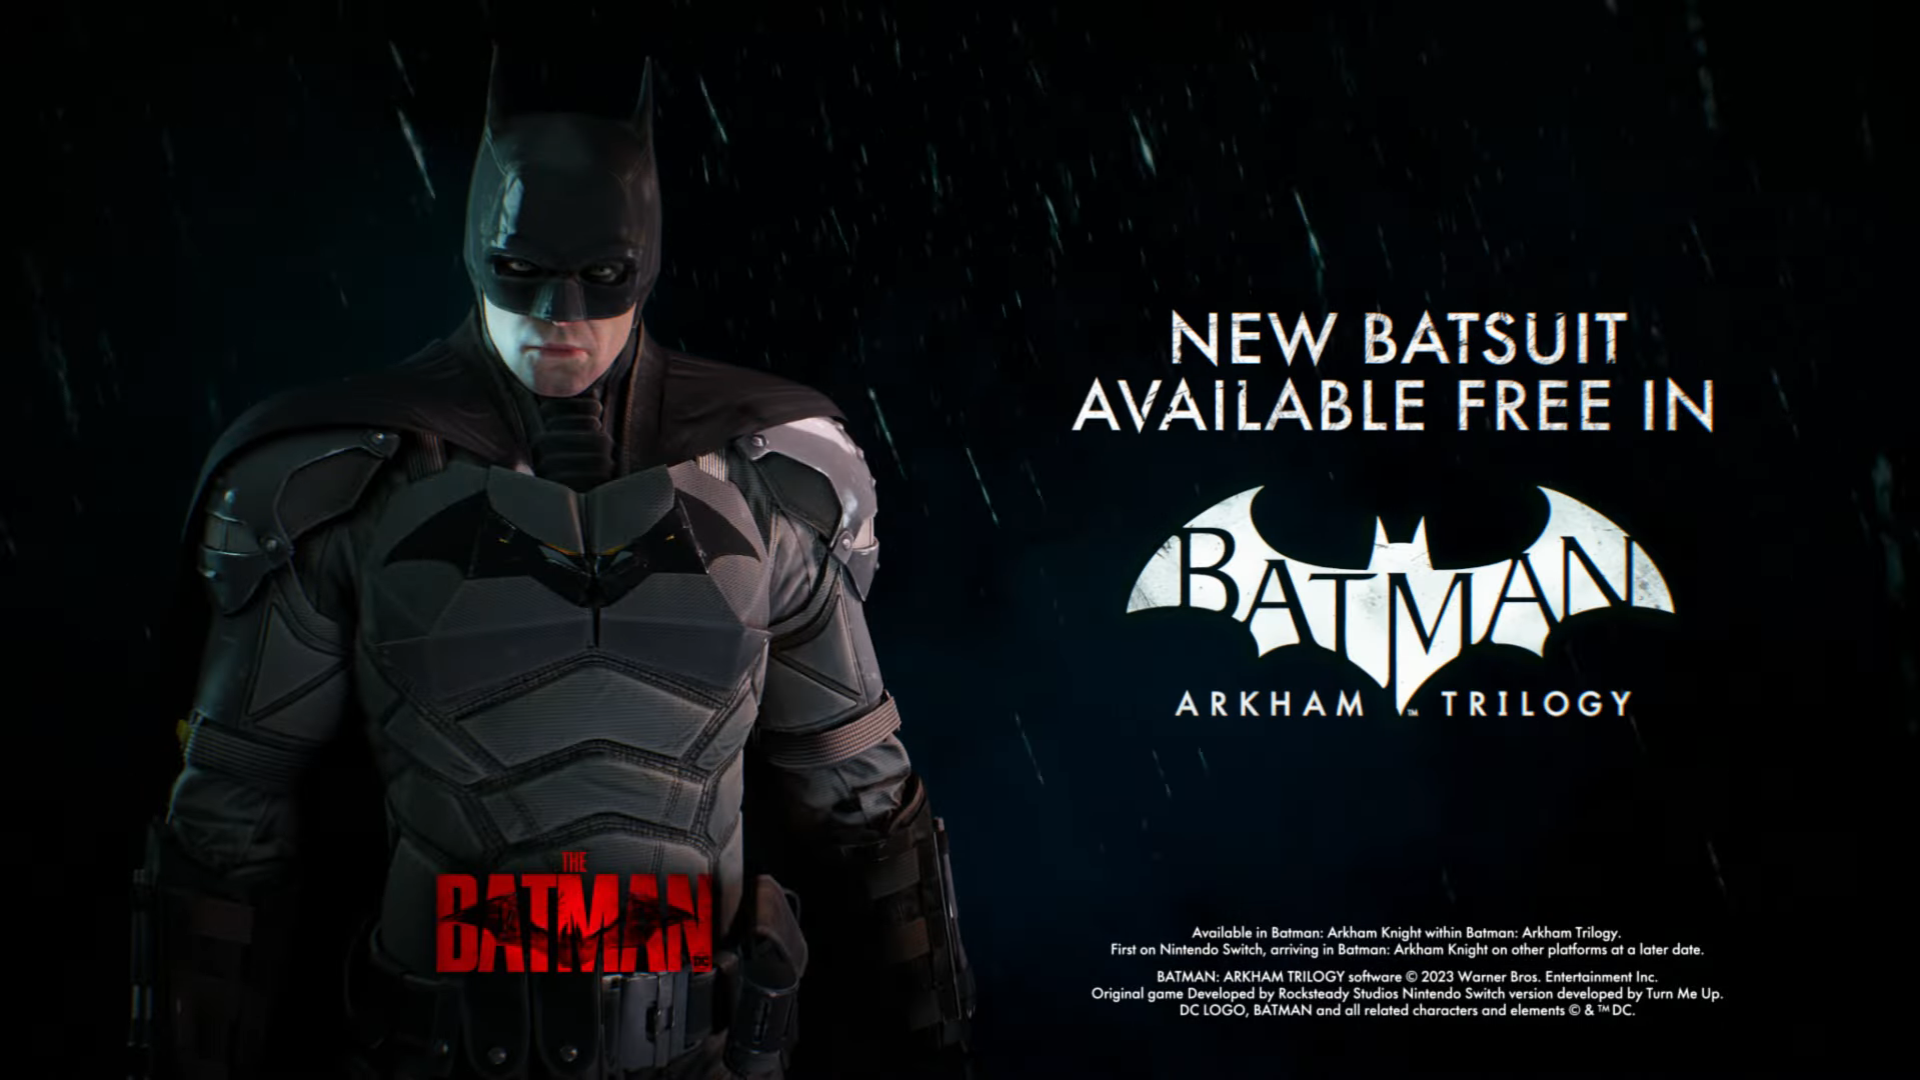 New Batman Arkham Trilogy Gameplay Trailer Reveals Robert Pattinson’s ‘The Batman’ Suit